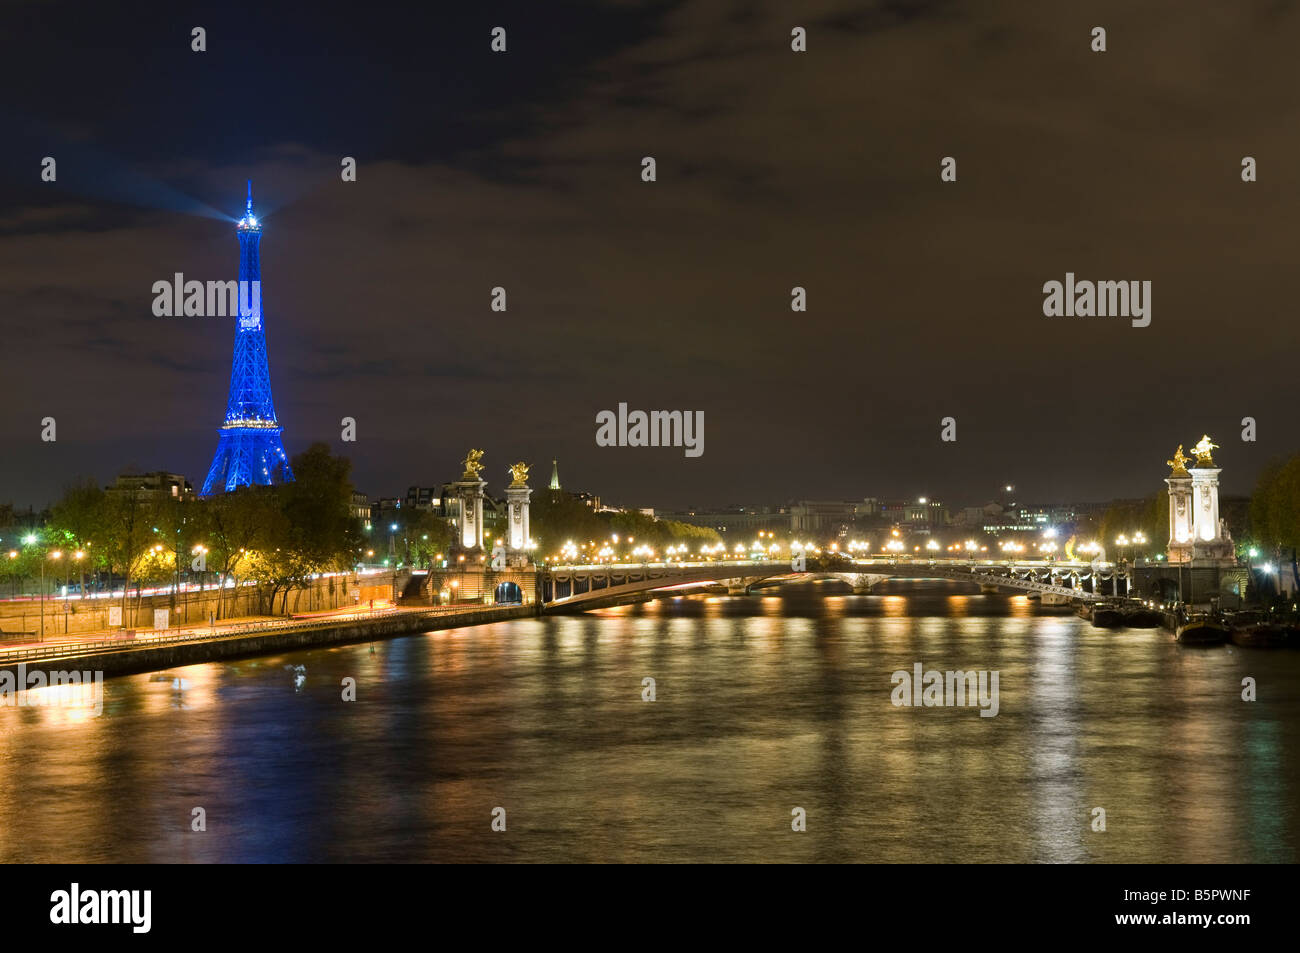 Eiffel Tower and Alexandre III Bridge at night, Paris France Stock Photo